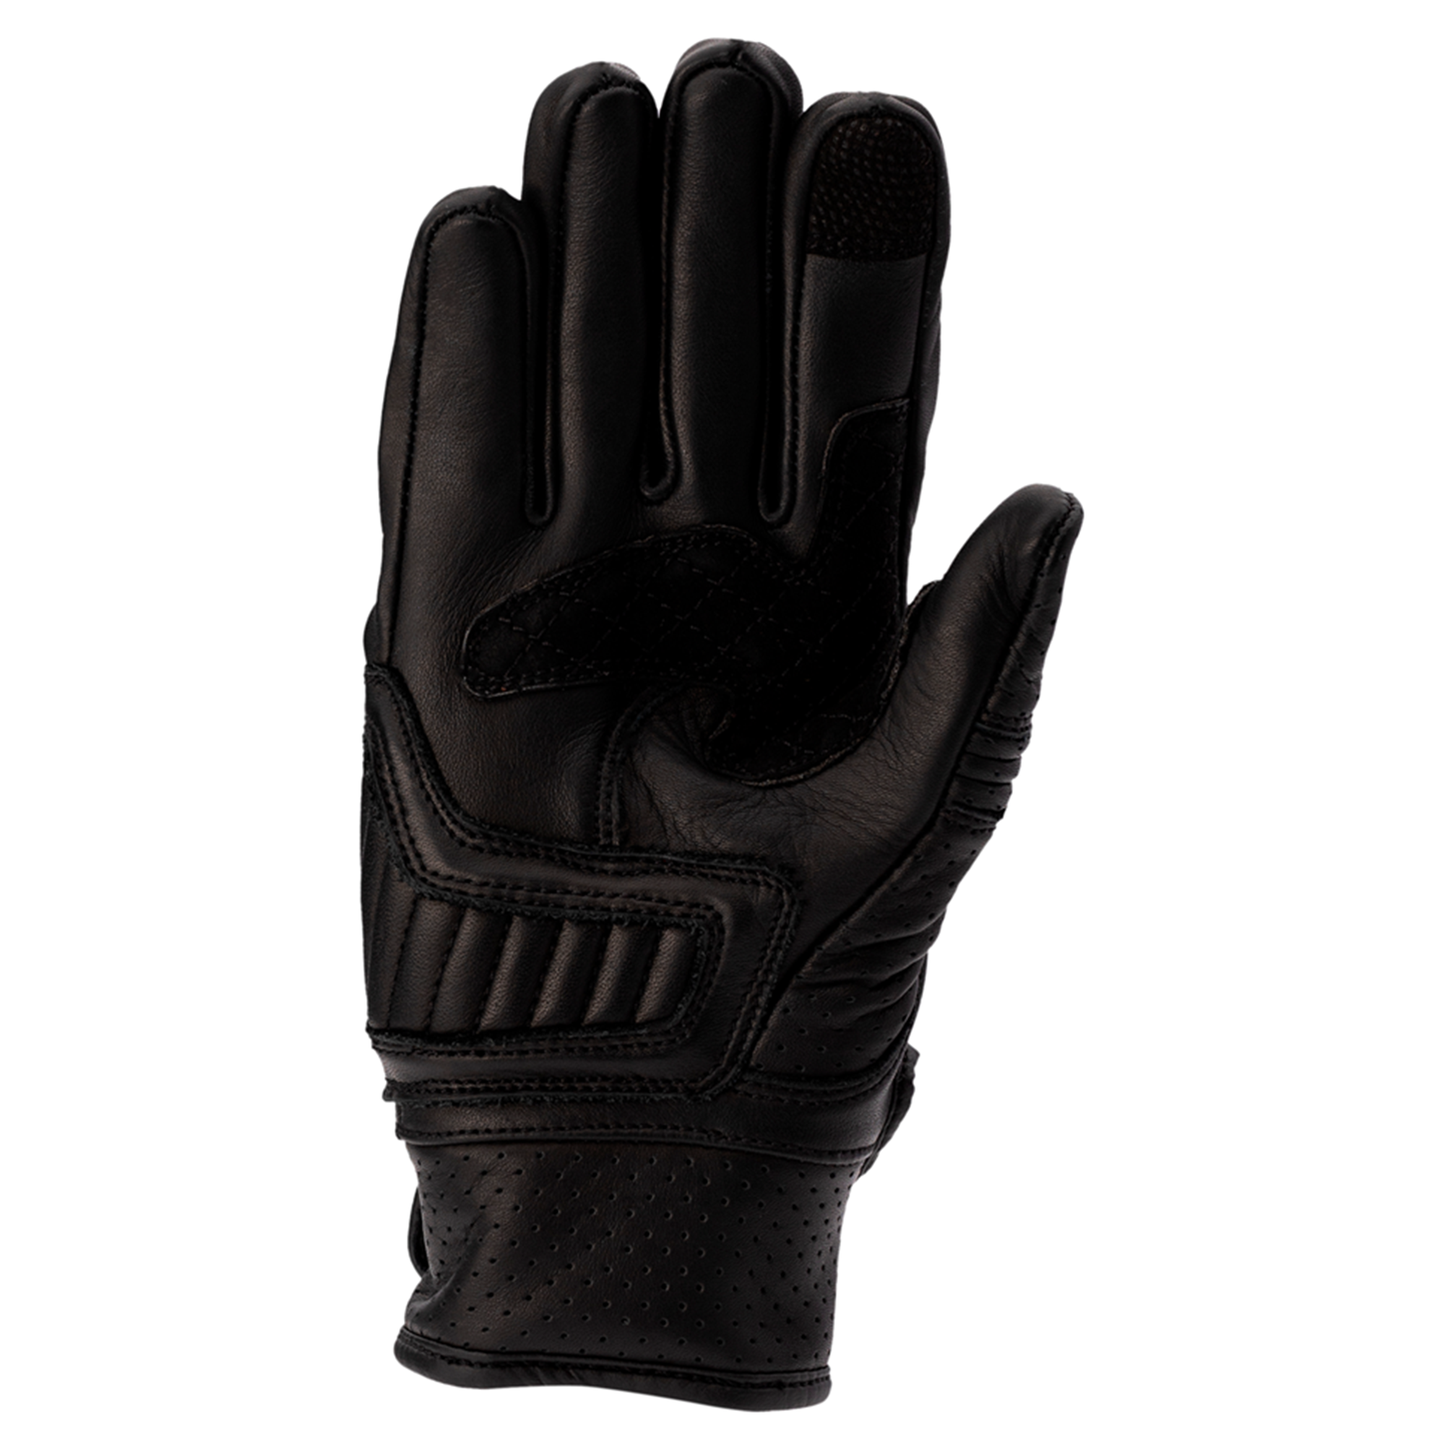 RST Roadster 3 CE Ladies Gloves - Black